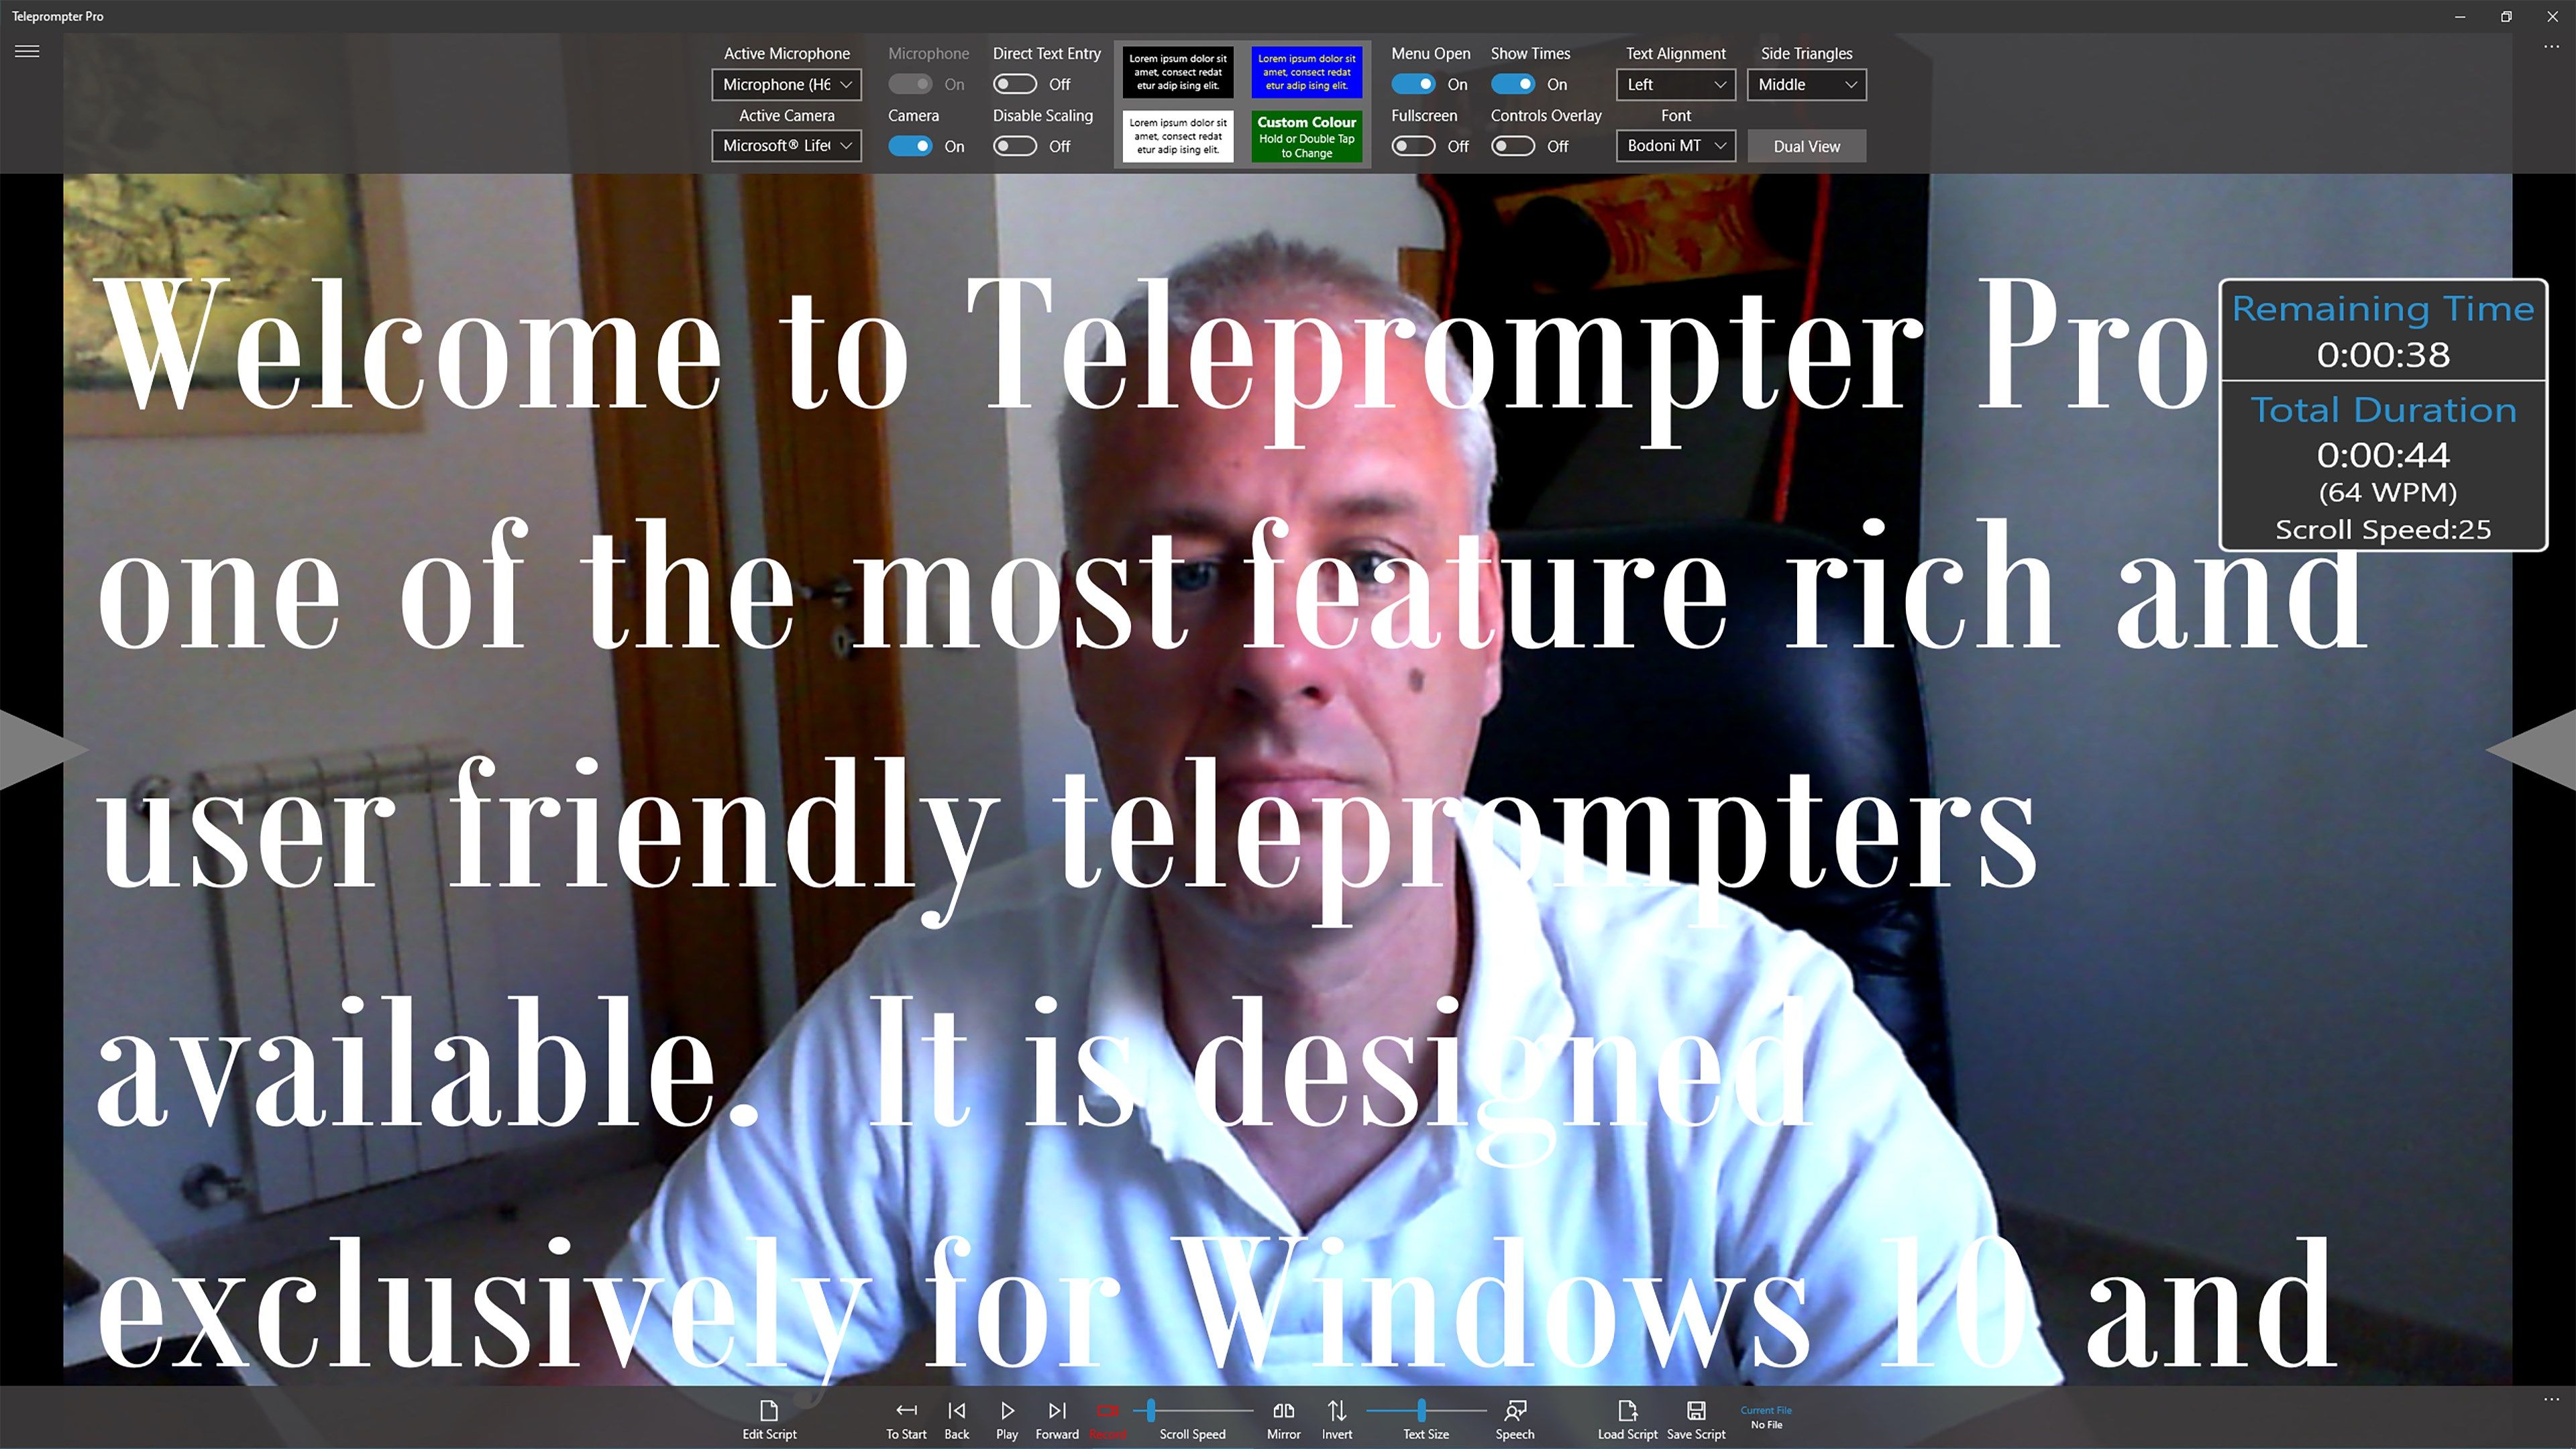 Teleprompter Pro